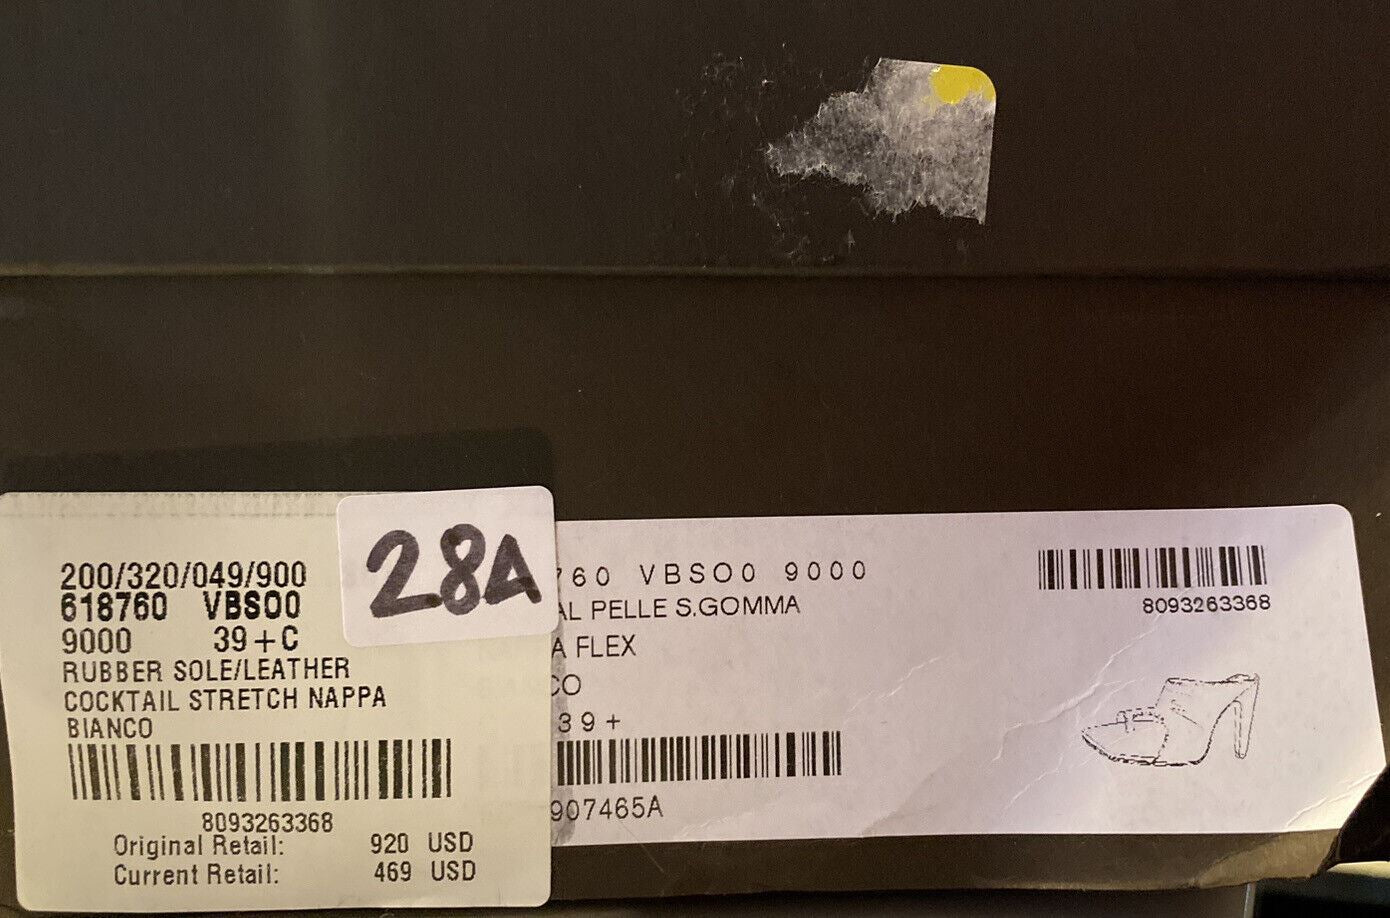 NIB $920 Bottega Veneta Leather Mules with High Vamp White Shoes 9.5 US 618760